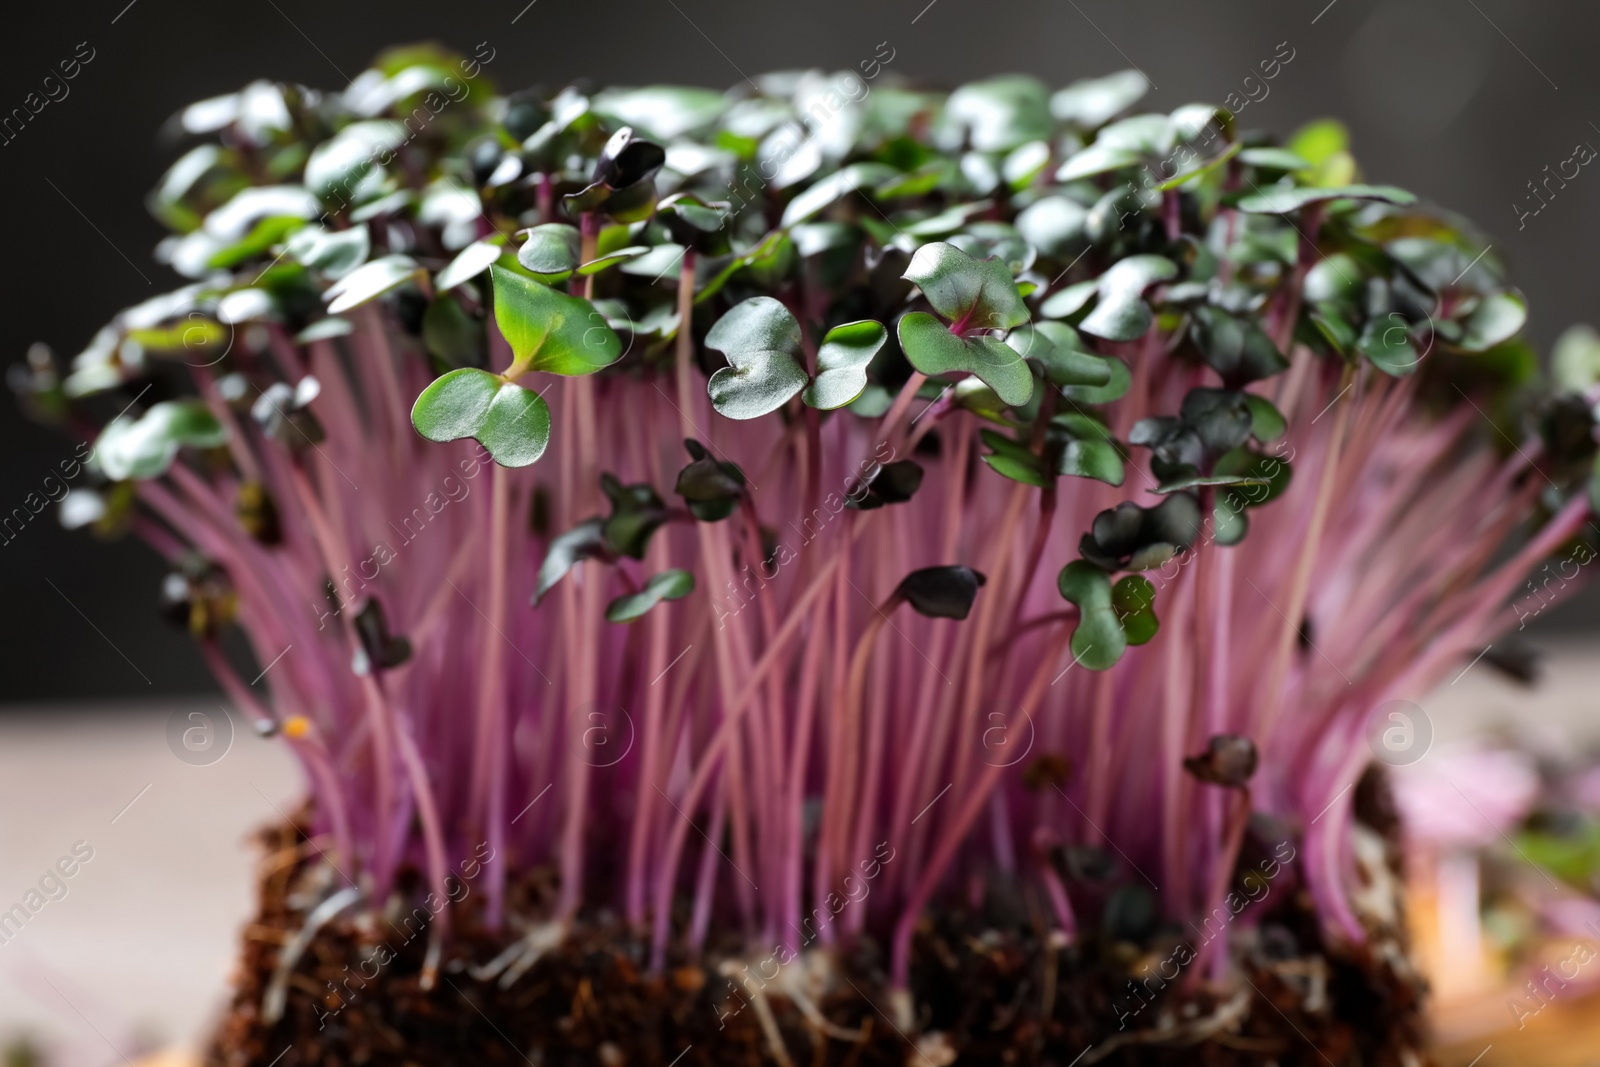 Photo of Fresh organic microgreen growing in soil, closeup view